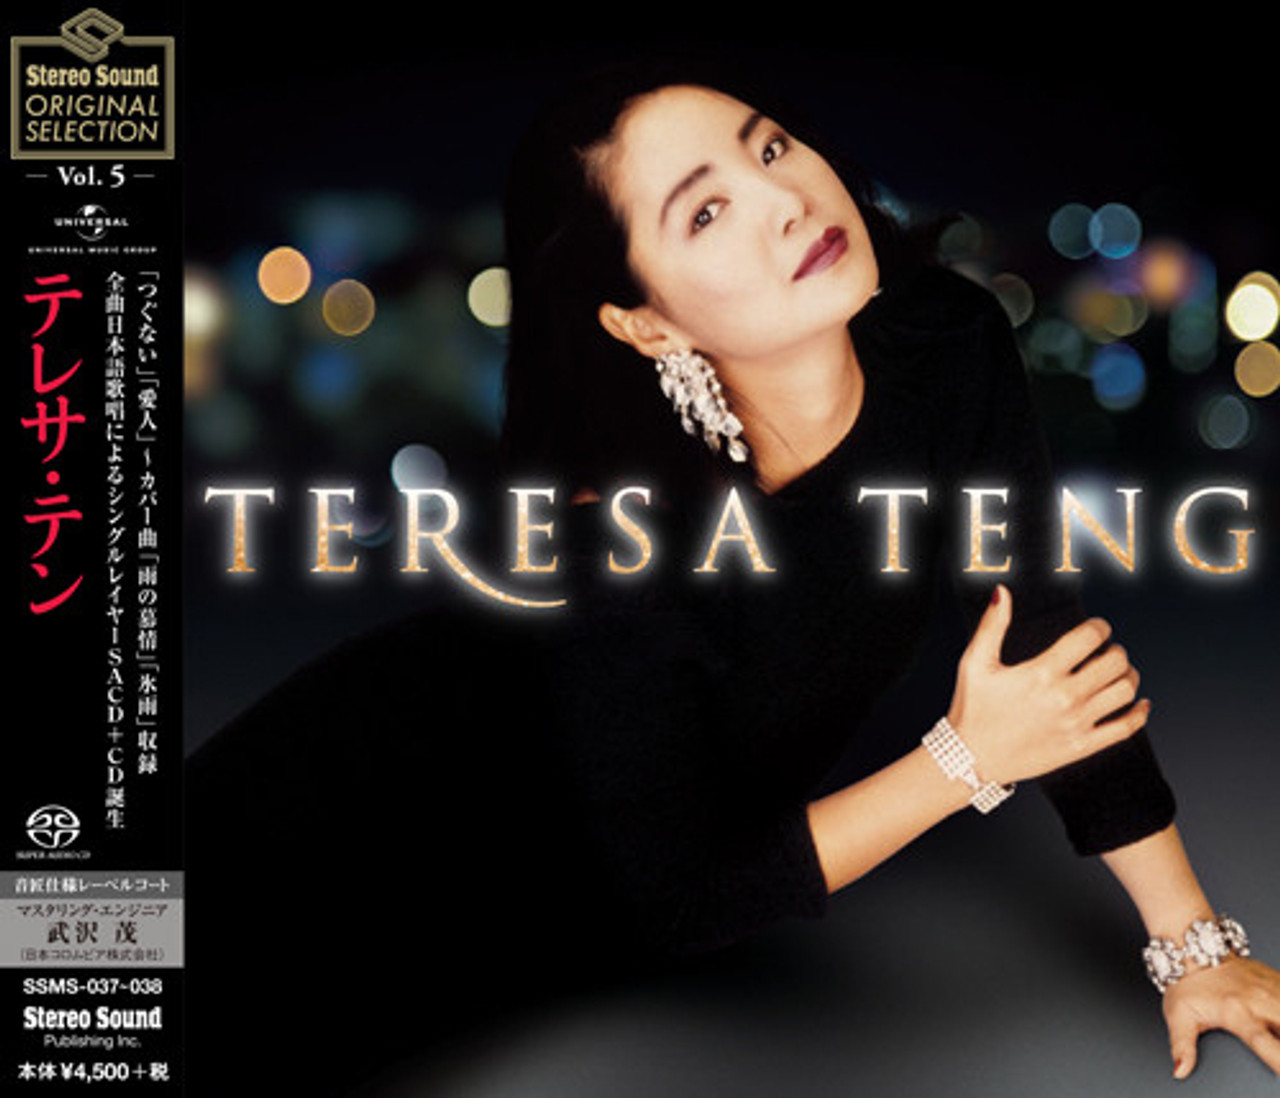 Teresa Teng Stereo Sound Original Selection Vol. 5 Single-Layer Stereo  Japanese Import SHM-SACD & CD